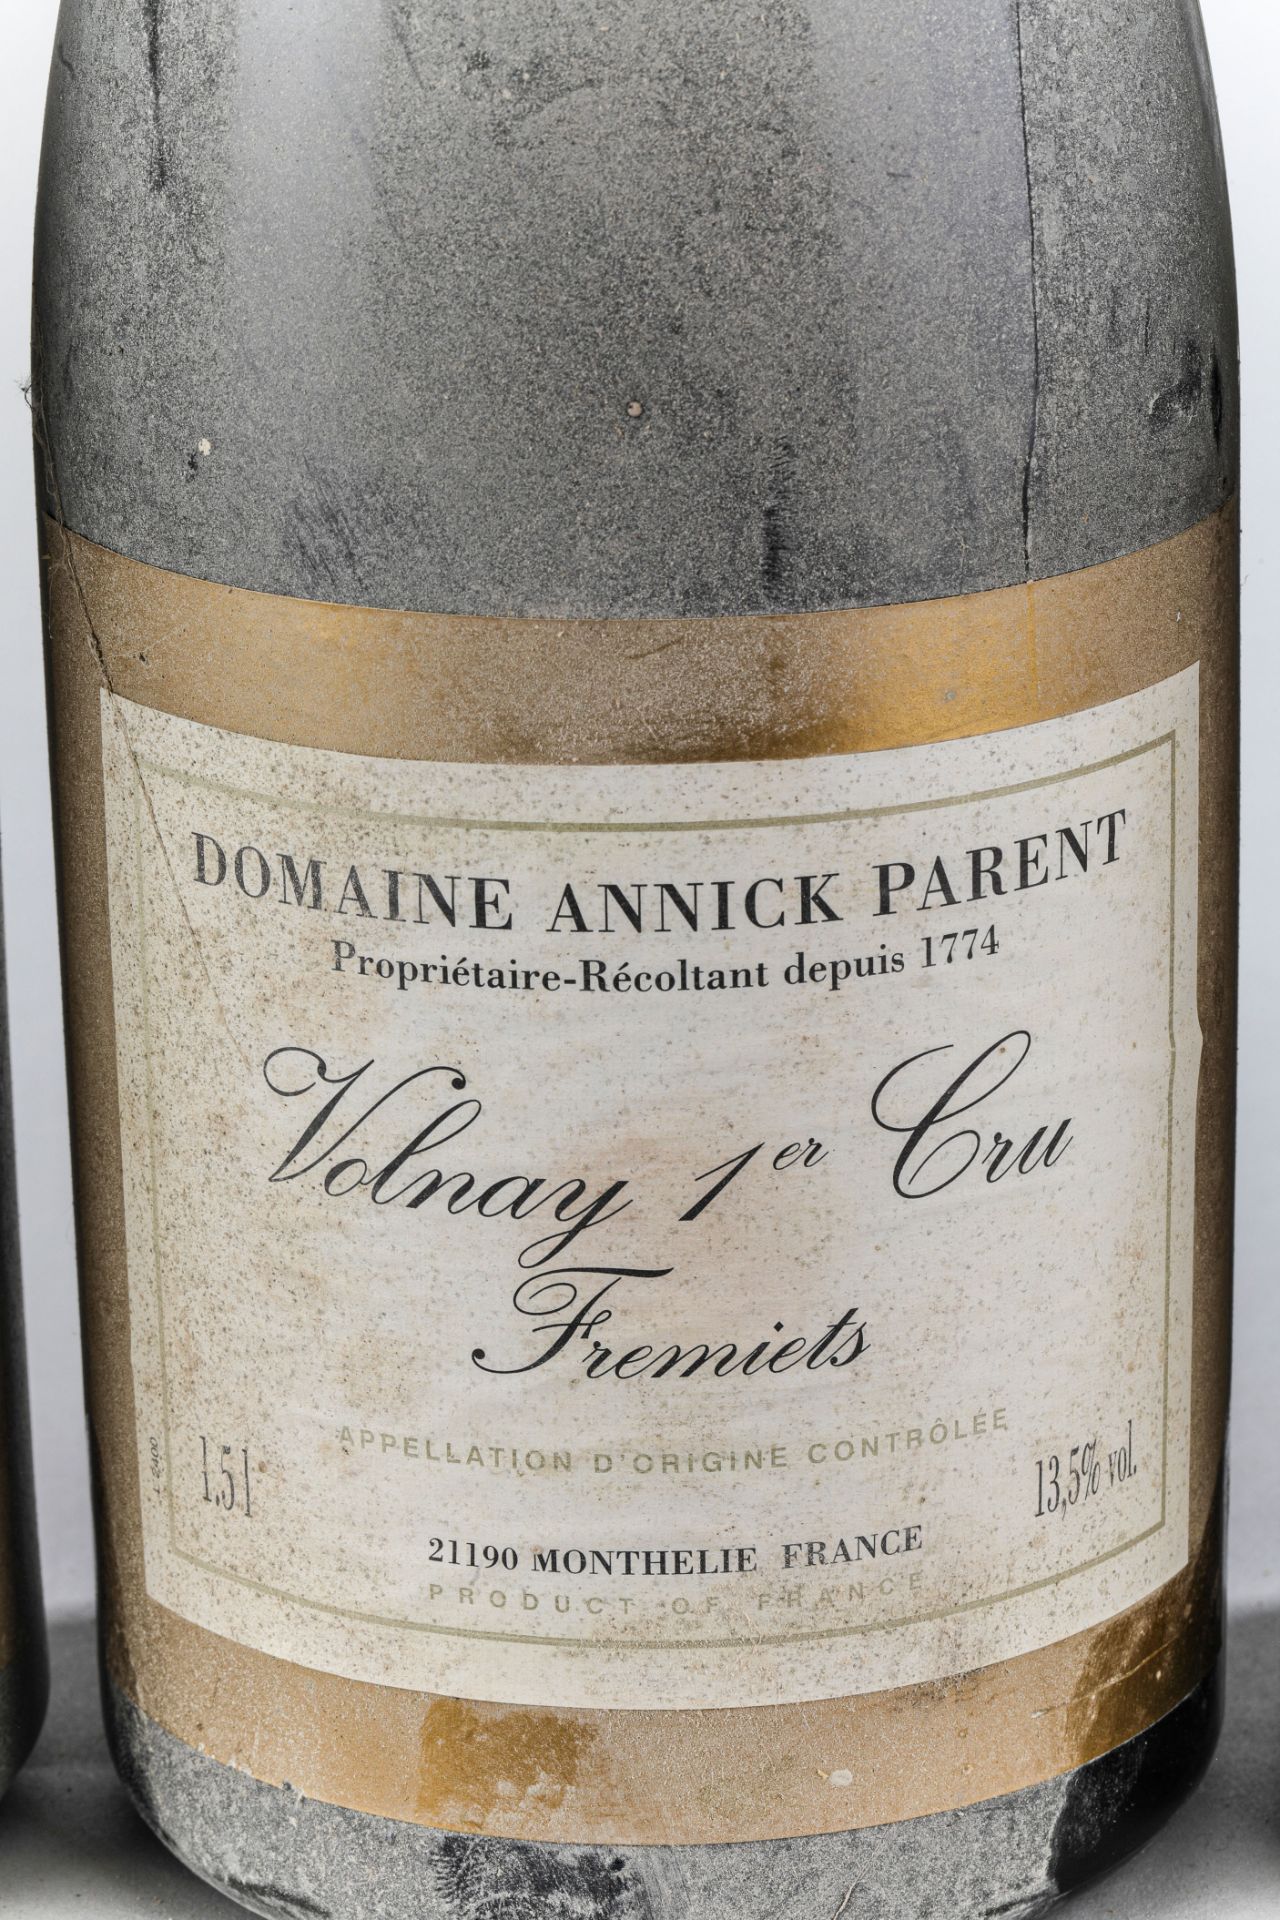 Volnay 1er cru. 1999. 3 bouteilles. Fremiets. Domaine Annick Parent. - Image 2 of 3